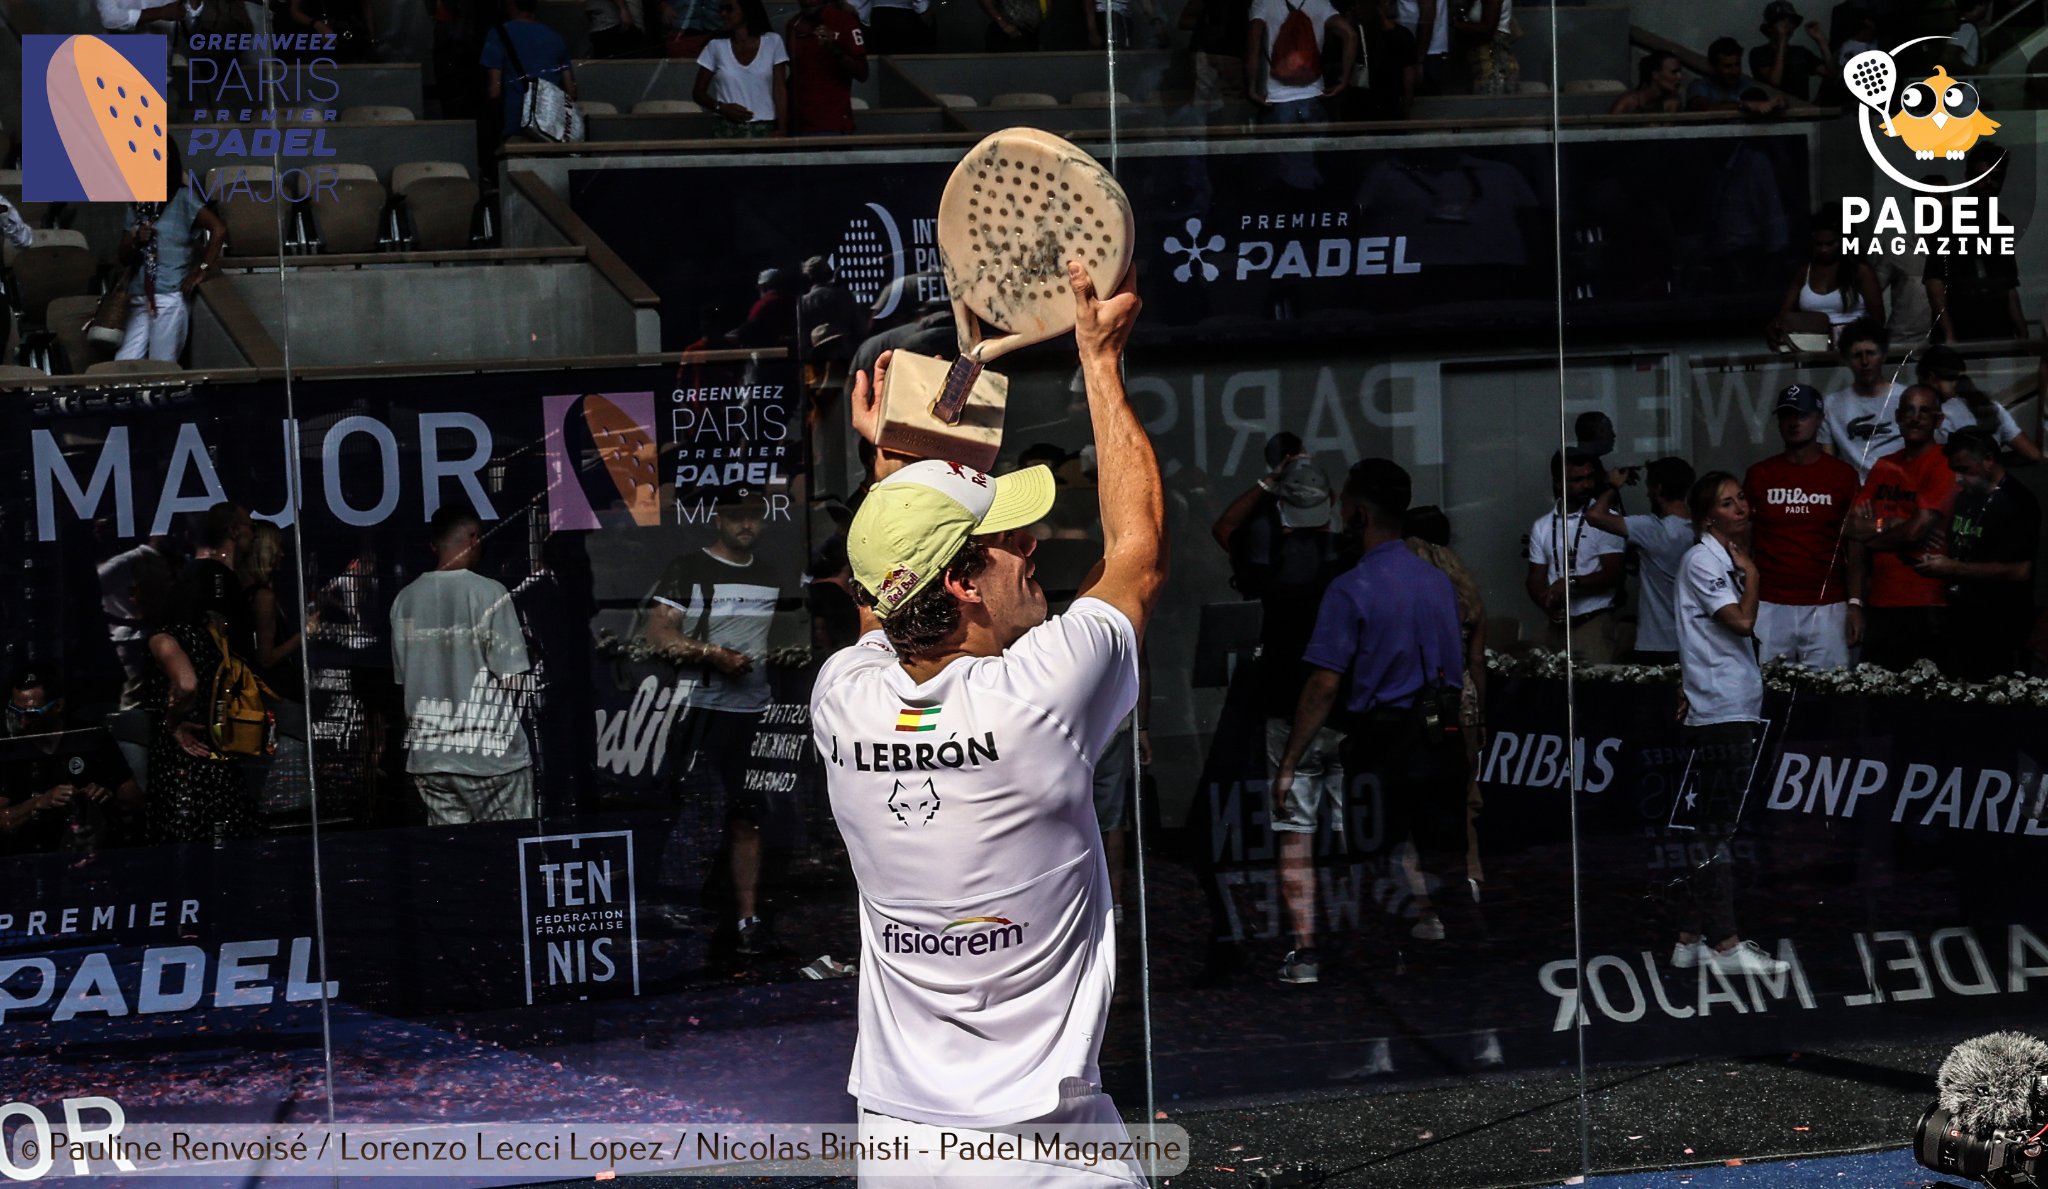 Juan Lebron podnosi trofeum